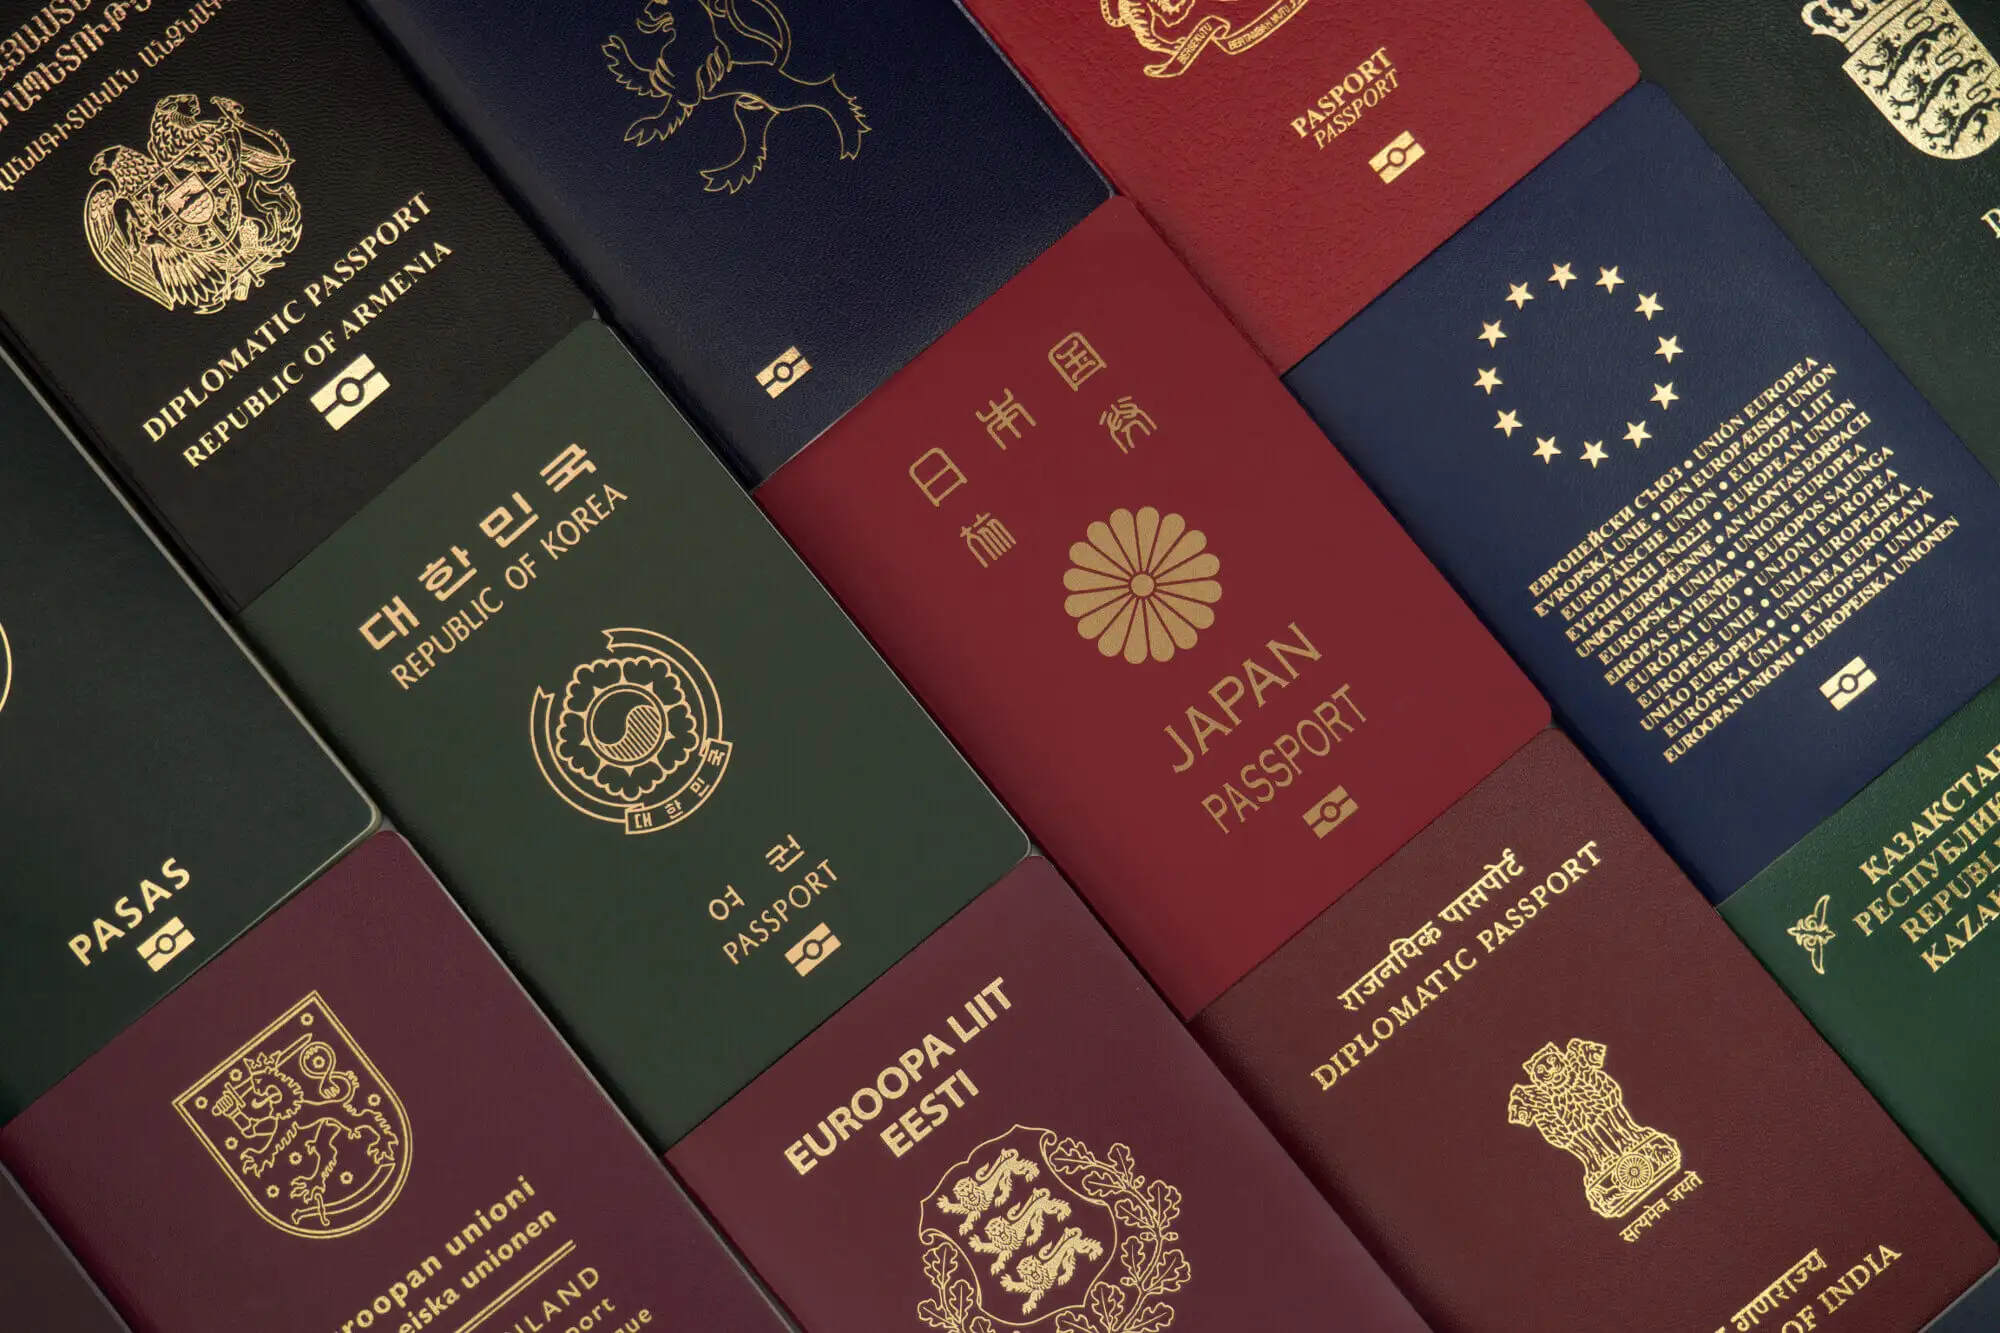 fake passports online